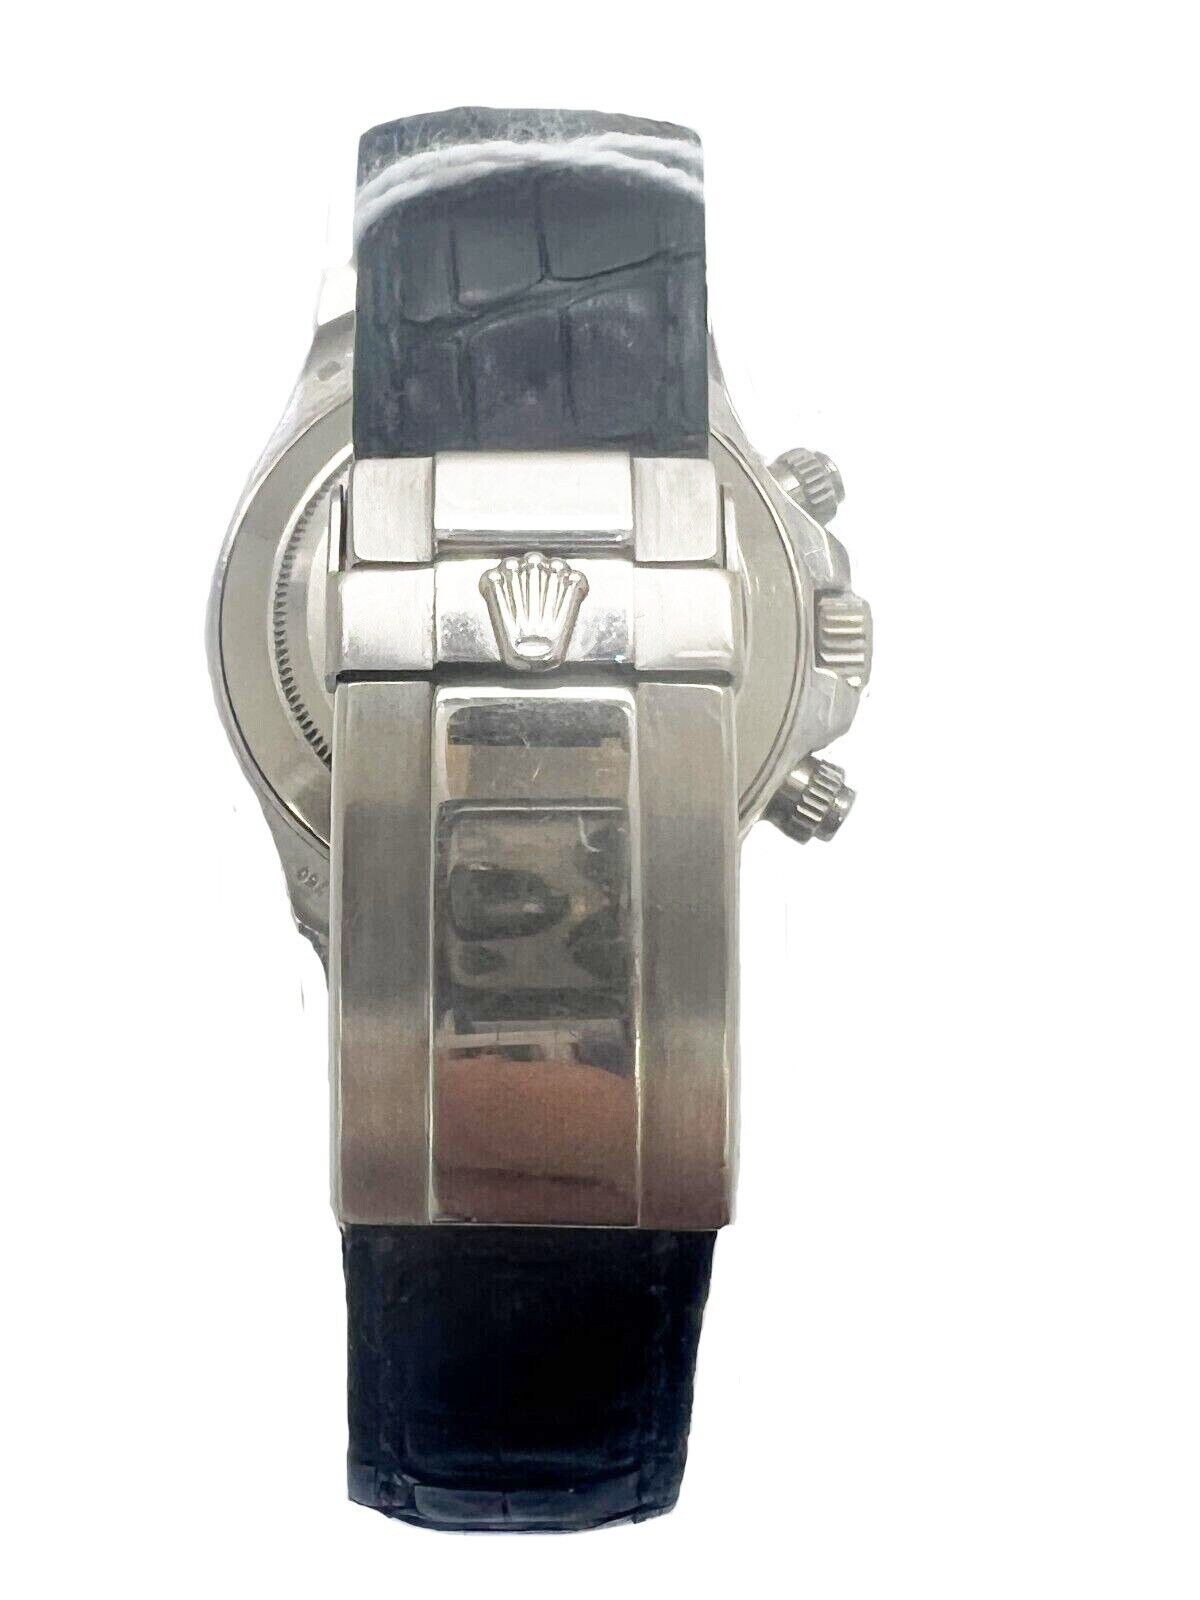 Rolex Daytona 116519 40mm Black Diamond Dial Watch